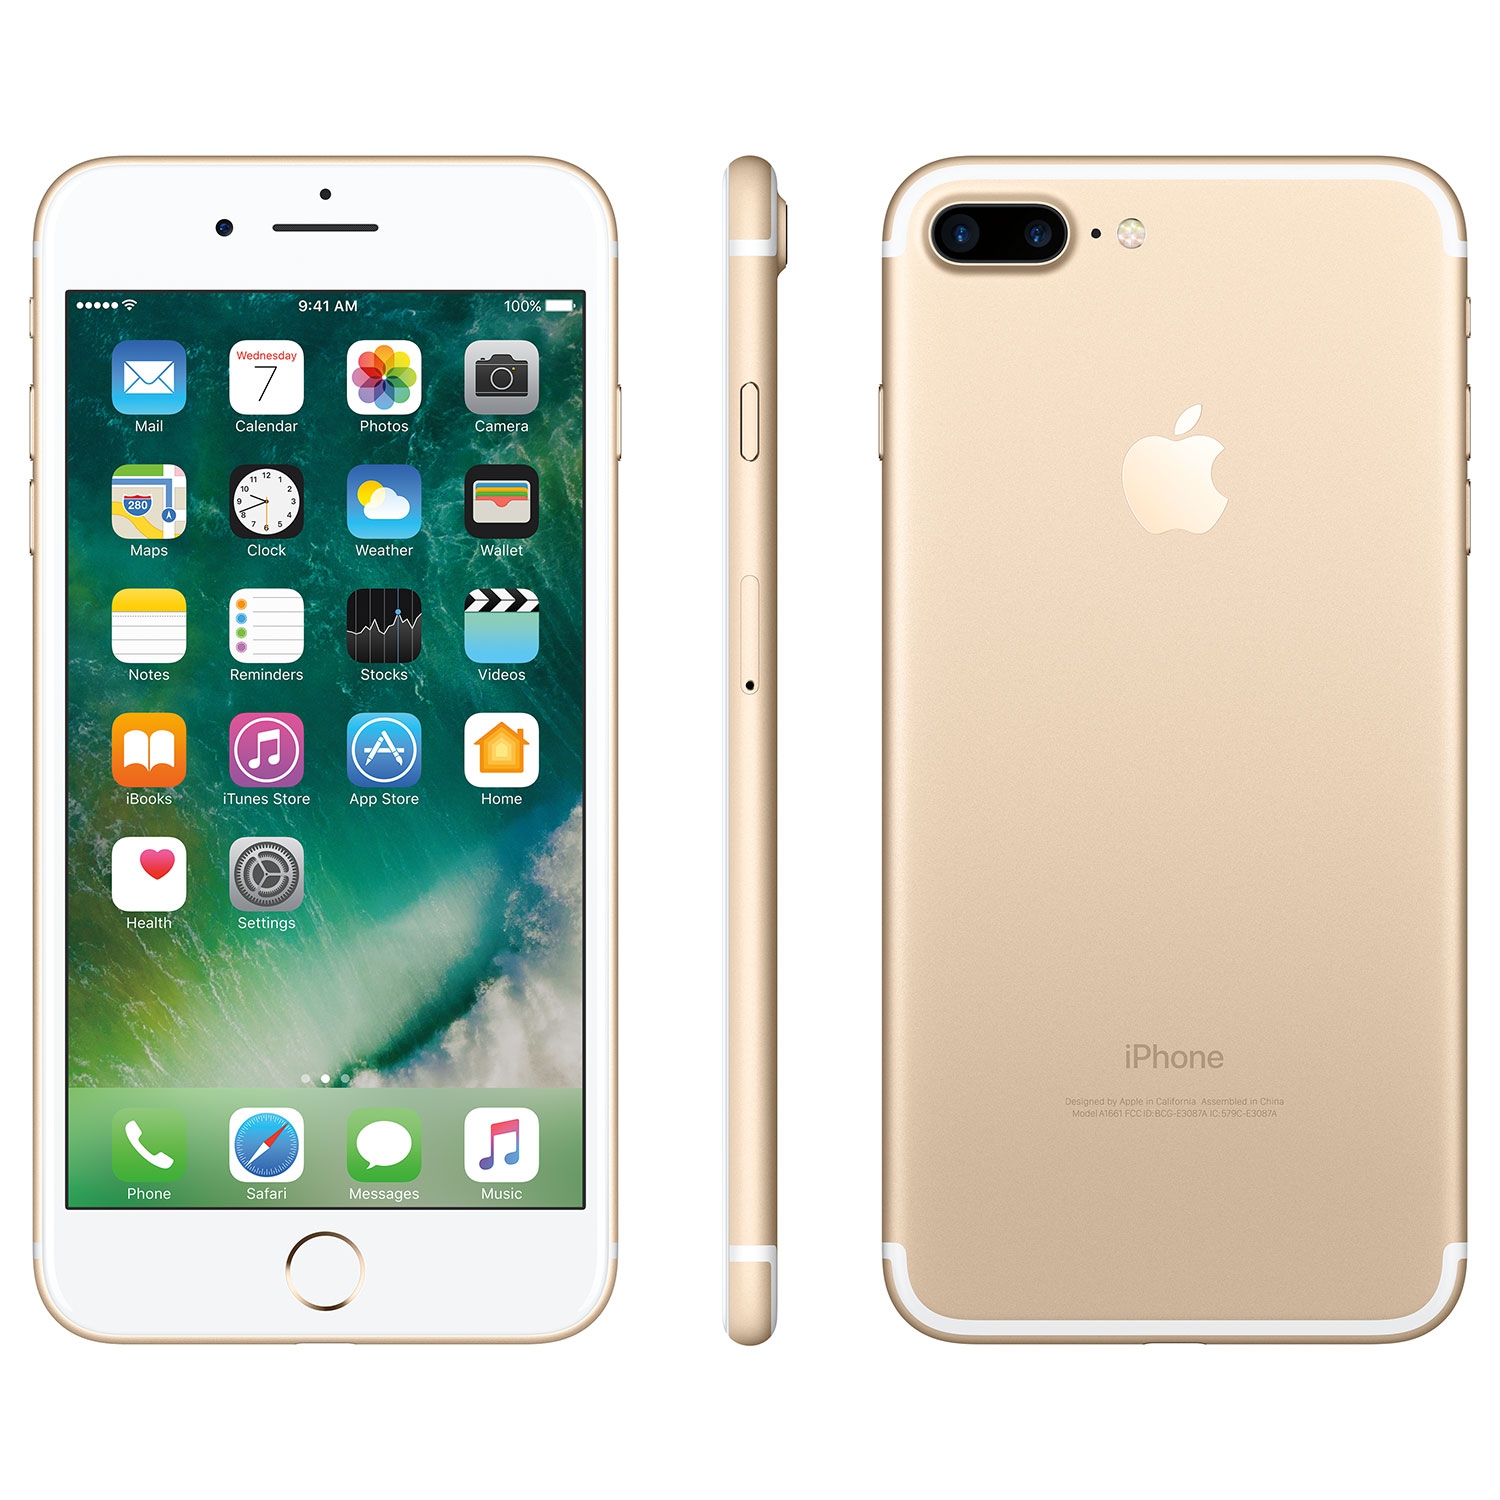 Apple iPhone 7 Plus 128GB Smartphone - Rose Gold - Unlocked - Open Box